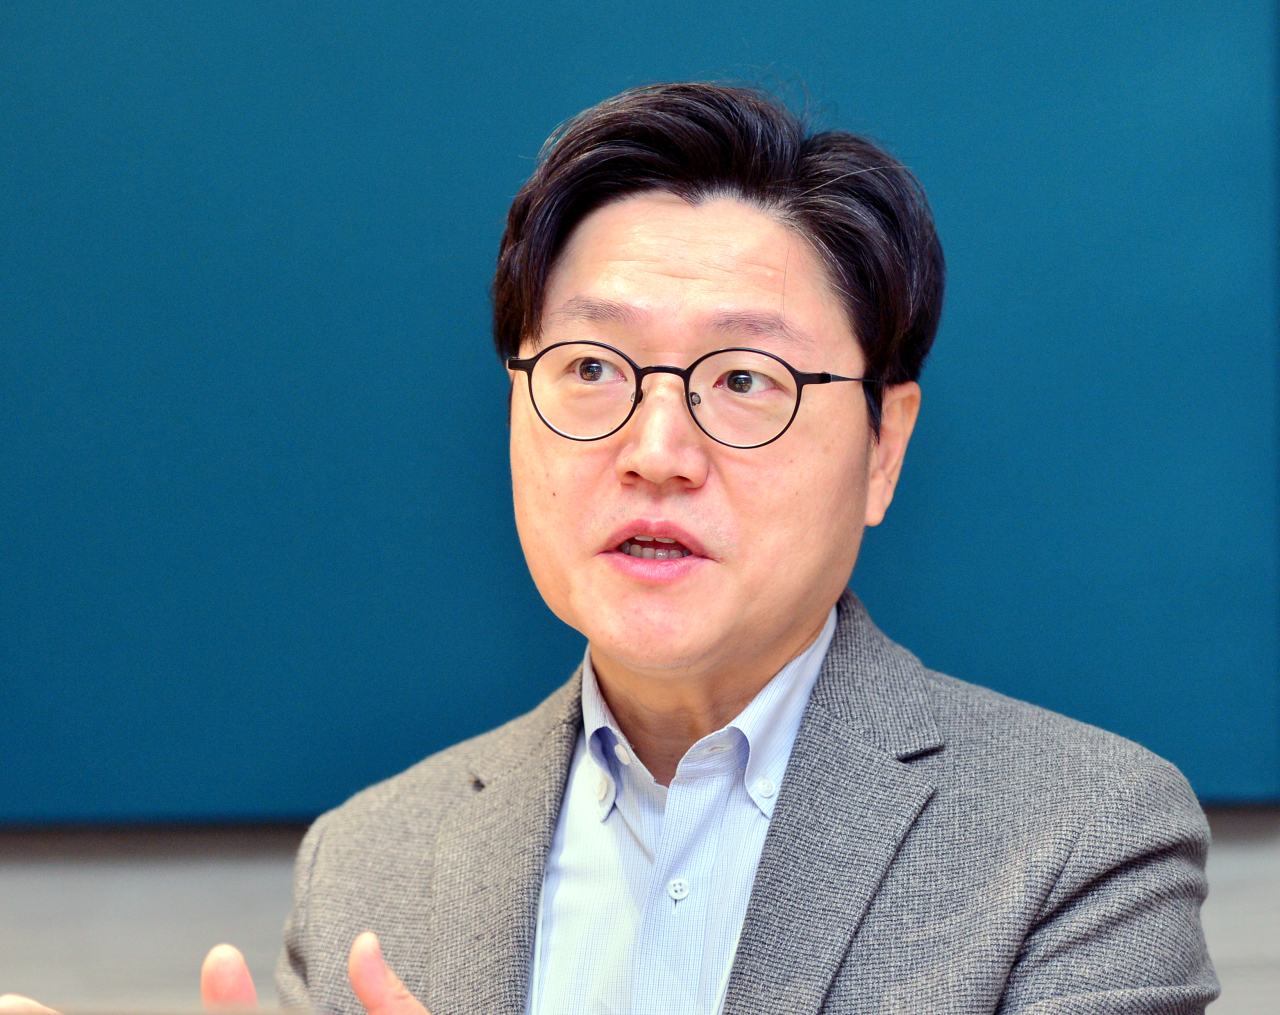 Kim Beom-joo, head of evangelism at Unity Korea, speaks during an interview with The Korea Herald at Unity Korea in Seoul on Nov. 29 (Park Hyun-koo / The Korea Herald)